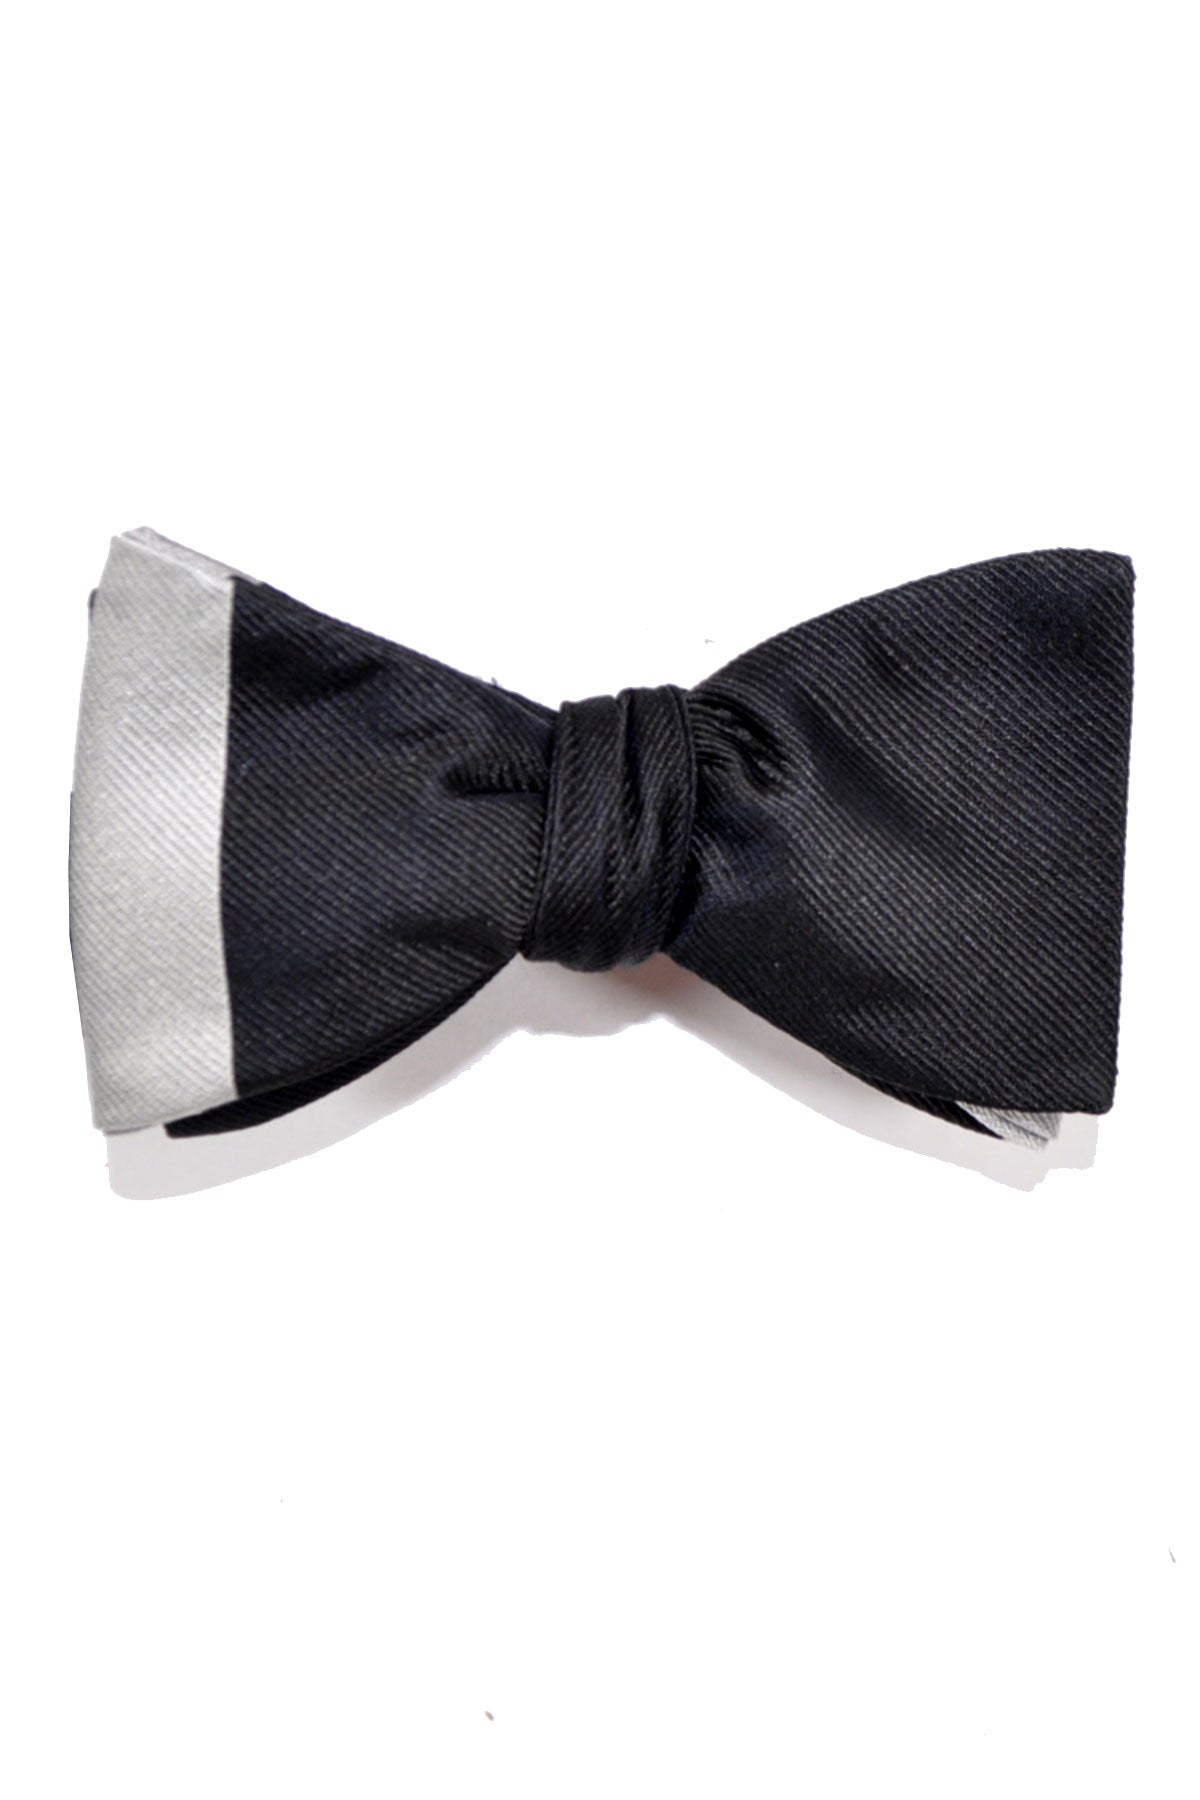 Gene Meyer Bow Tie Black Gray Stripe - Self Tie SALE